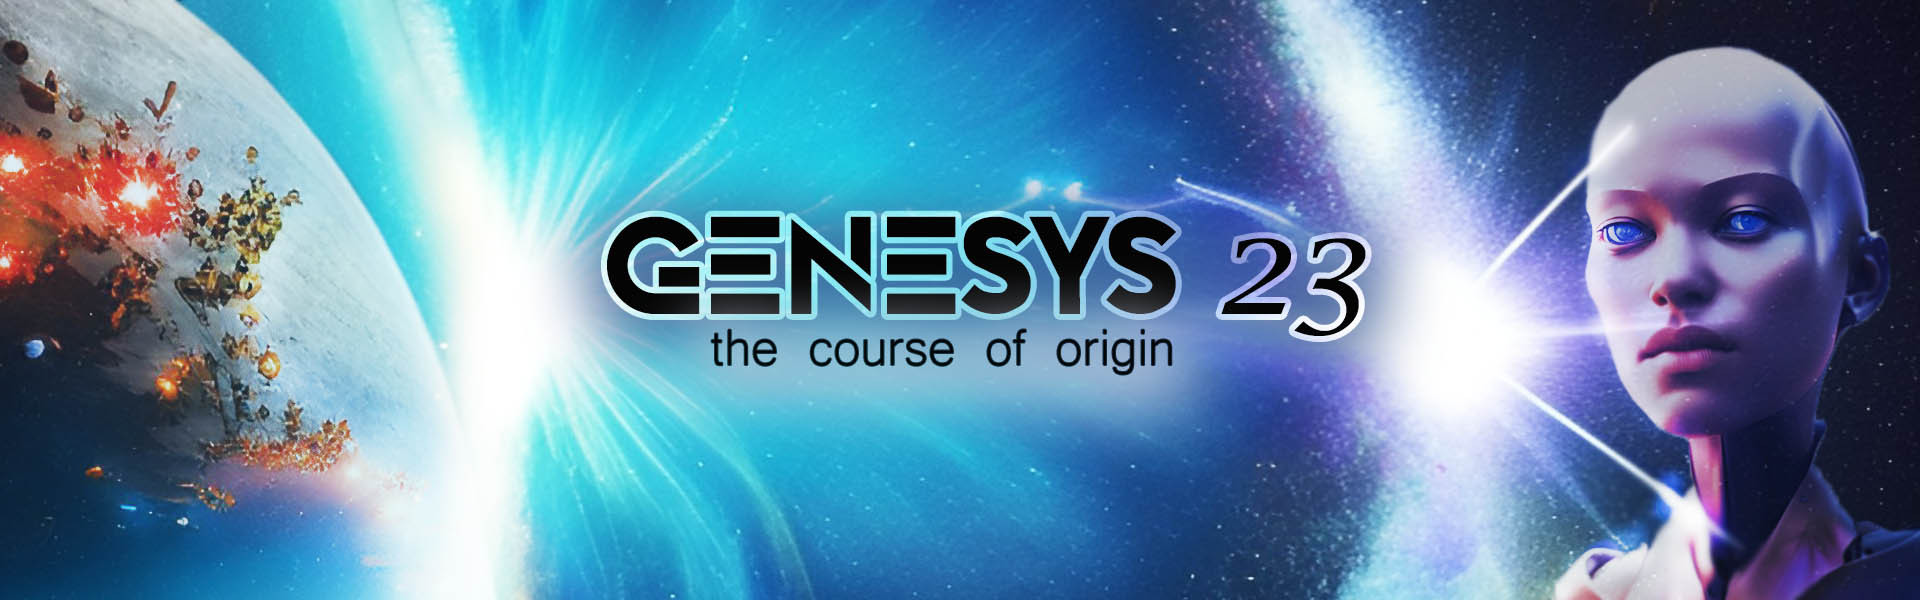 Stefan Erbe Sound of sky Genesys 23 – the course of origin